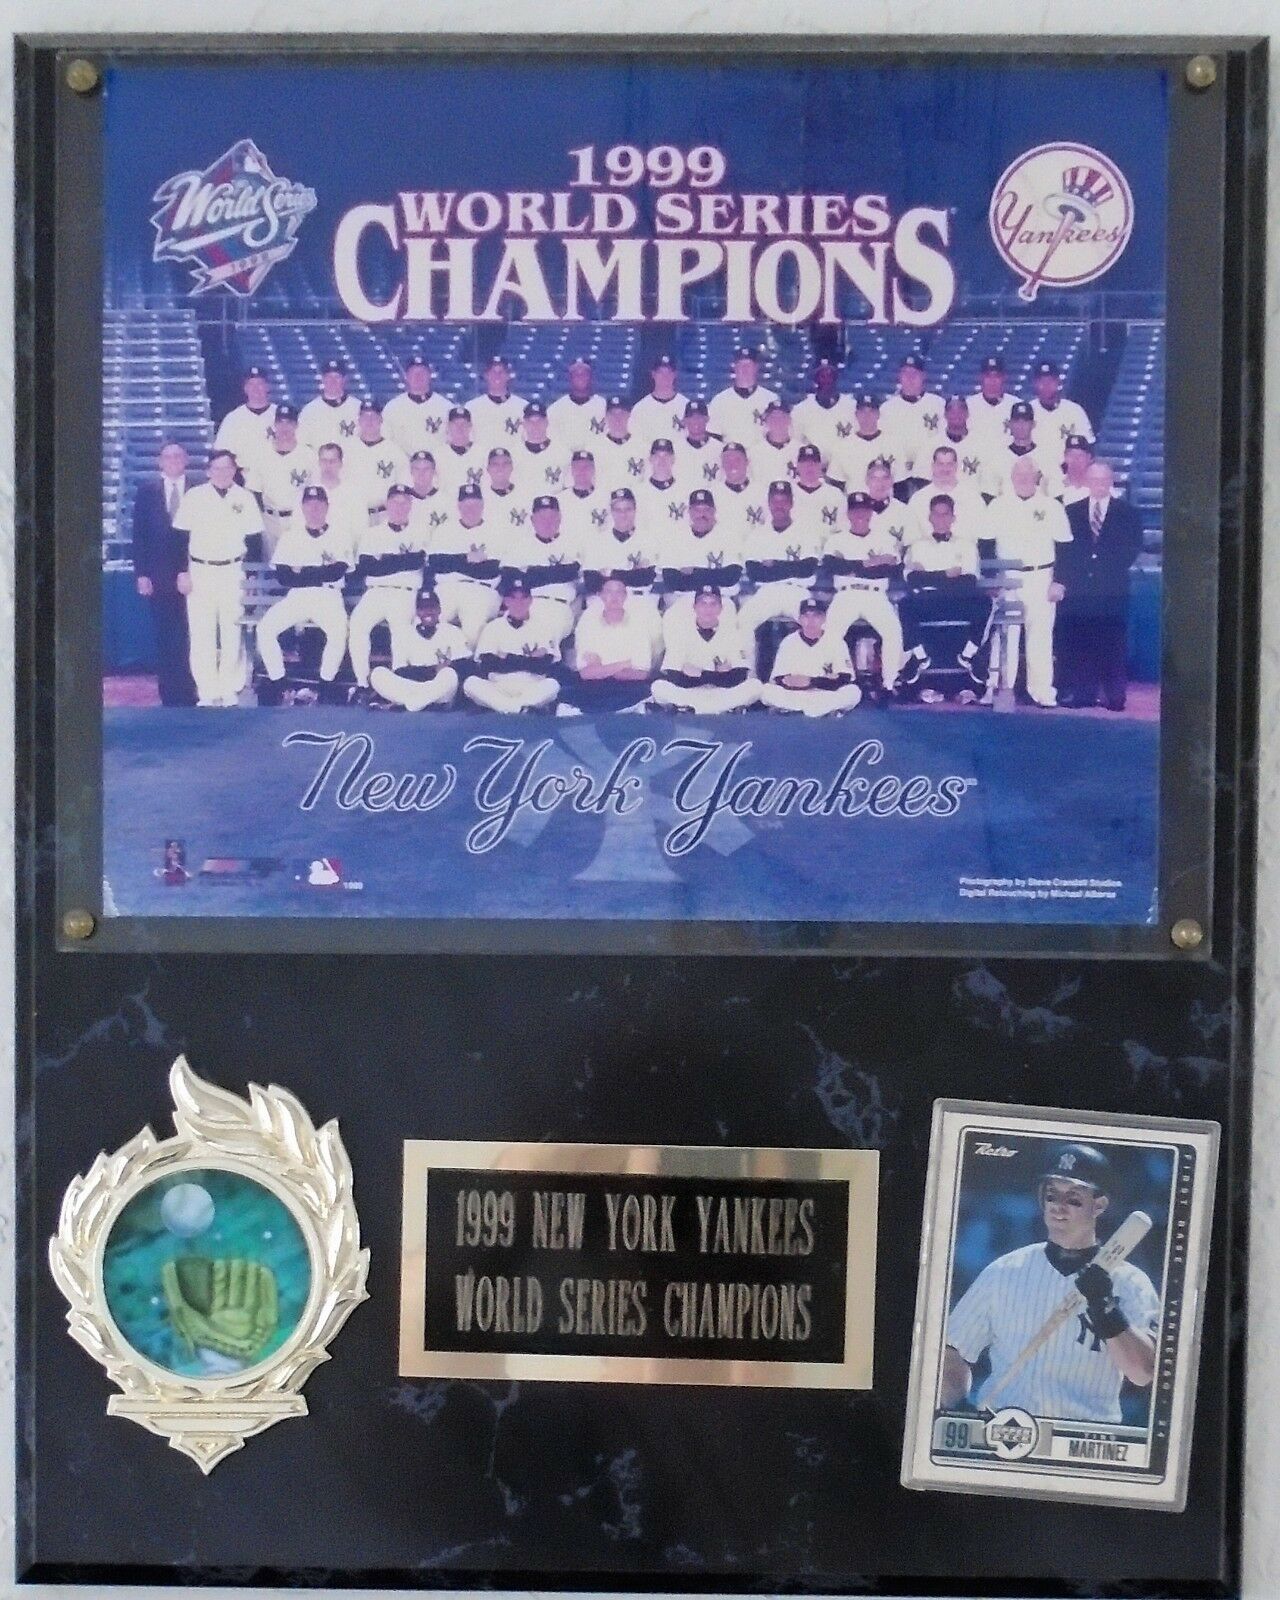 1999 Ny Yankees World Series Champions Team Photo Plaque With Tino Martinez Card